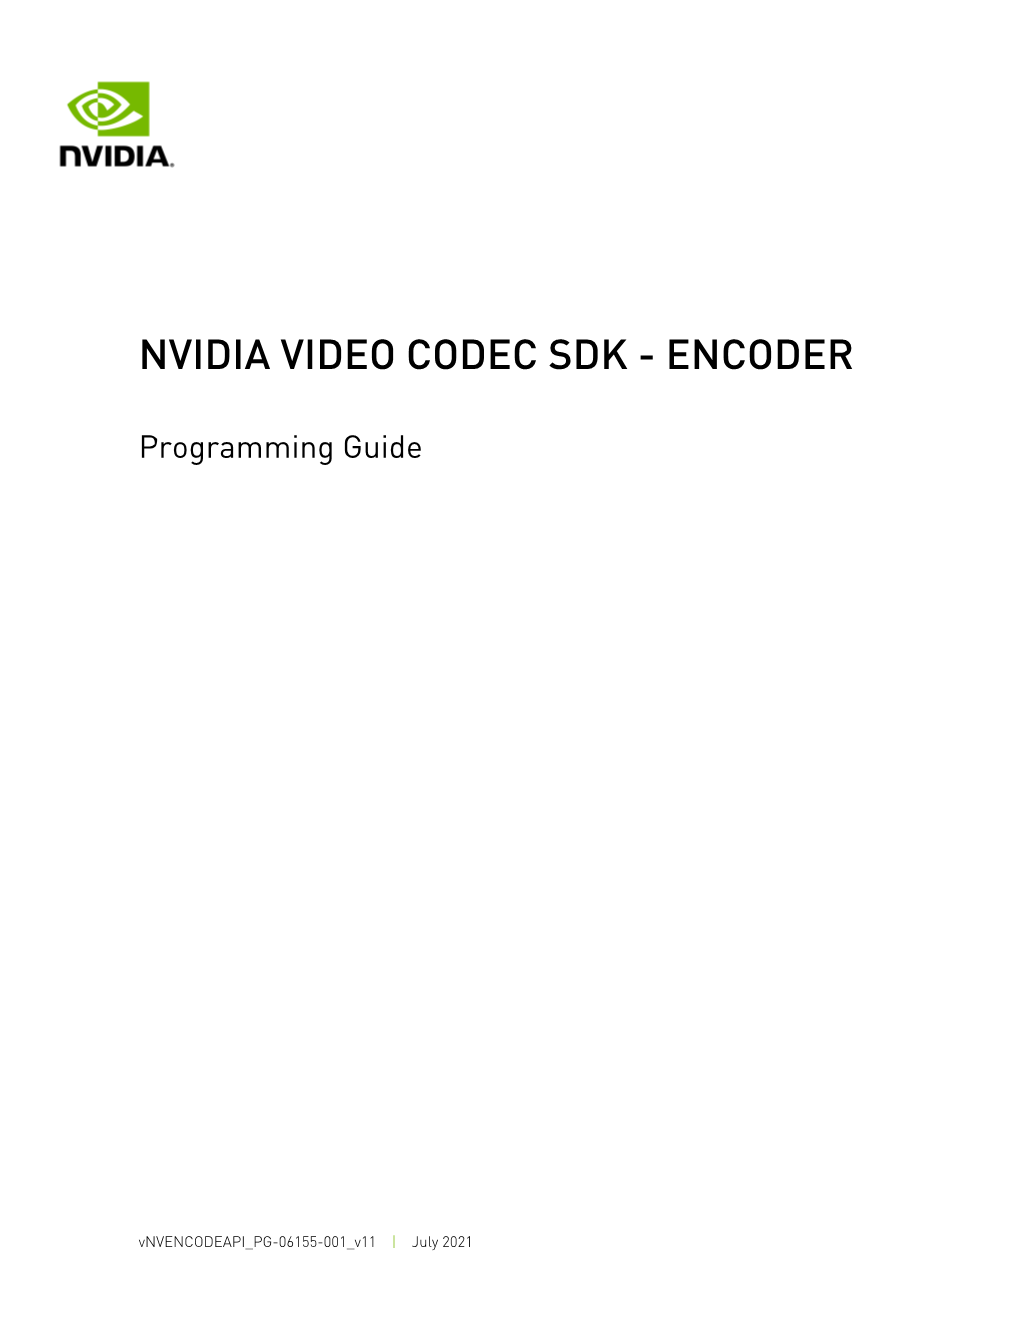 Nvidia Video Codec Sdk - Encoder